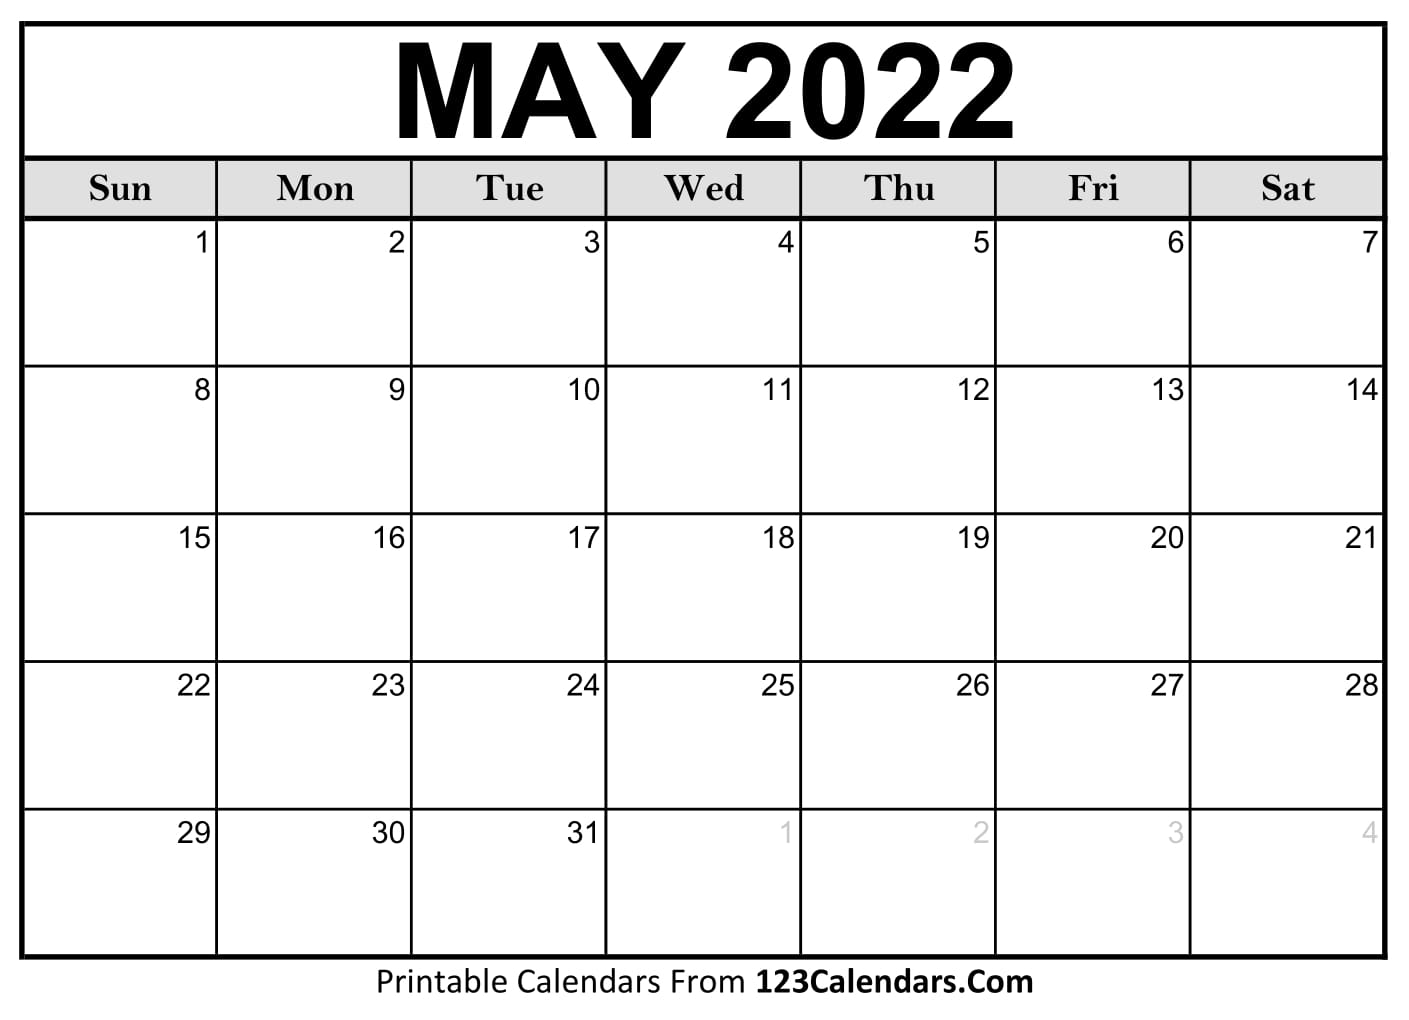 May 2022 Blank Calendar Printable Printable May 2022 Calendar Templates - 123Calendars.com